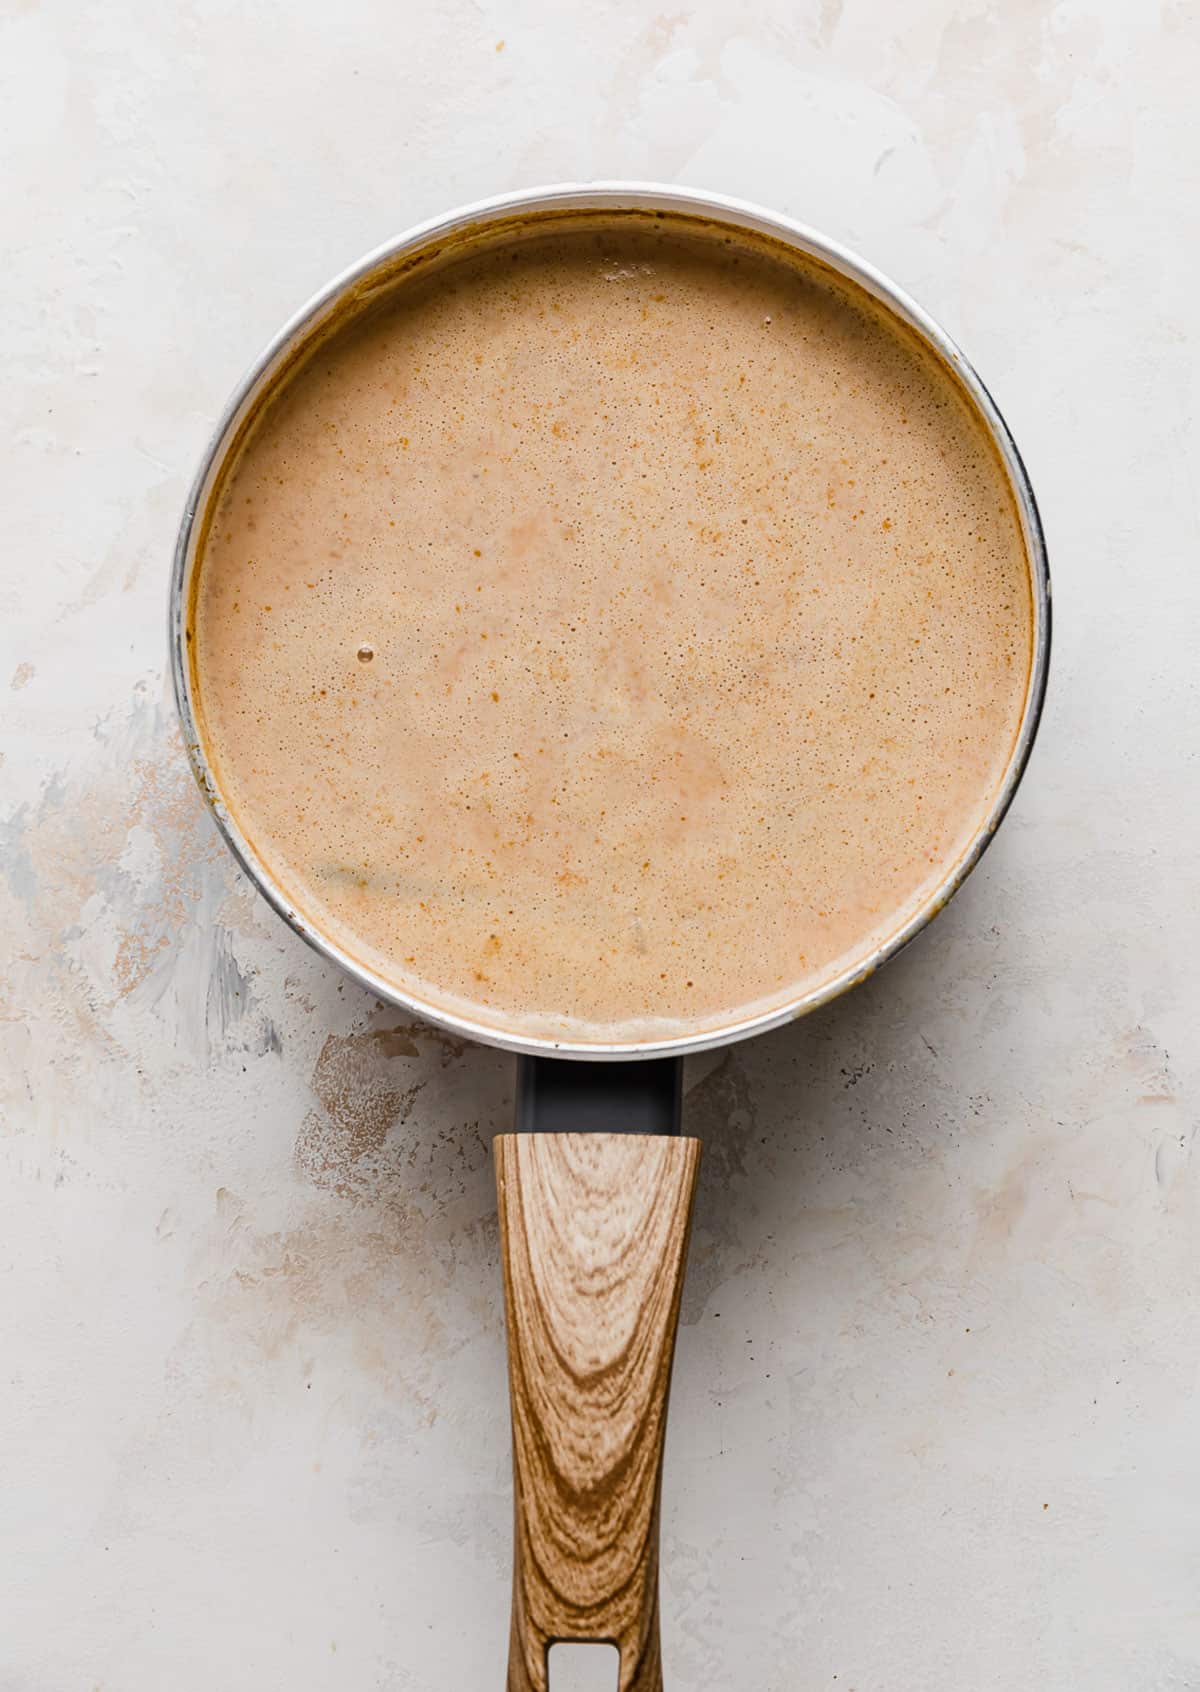 A light brown liquid mixture in a saucepan.